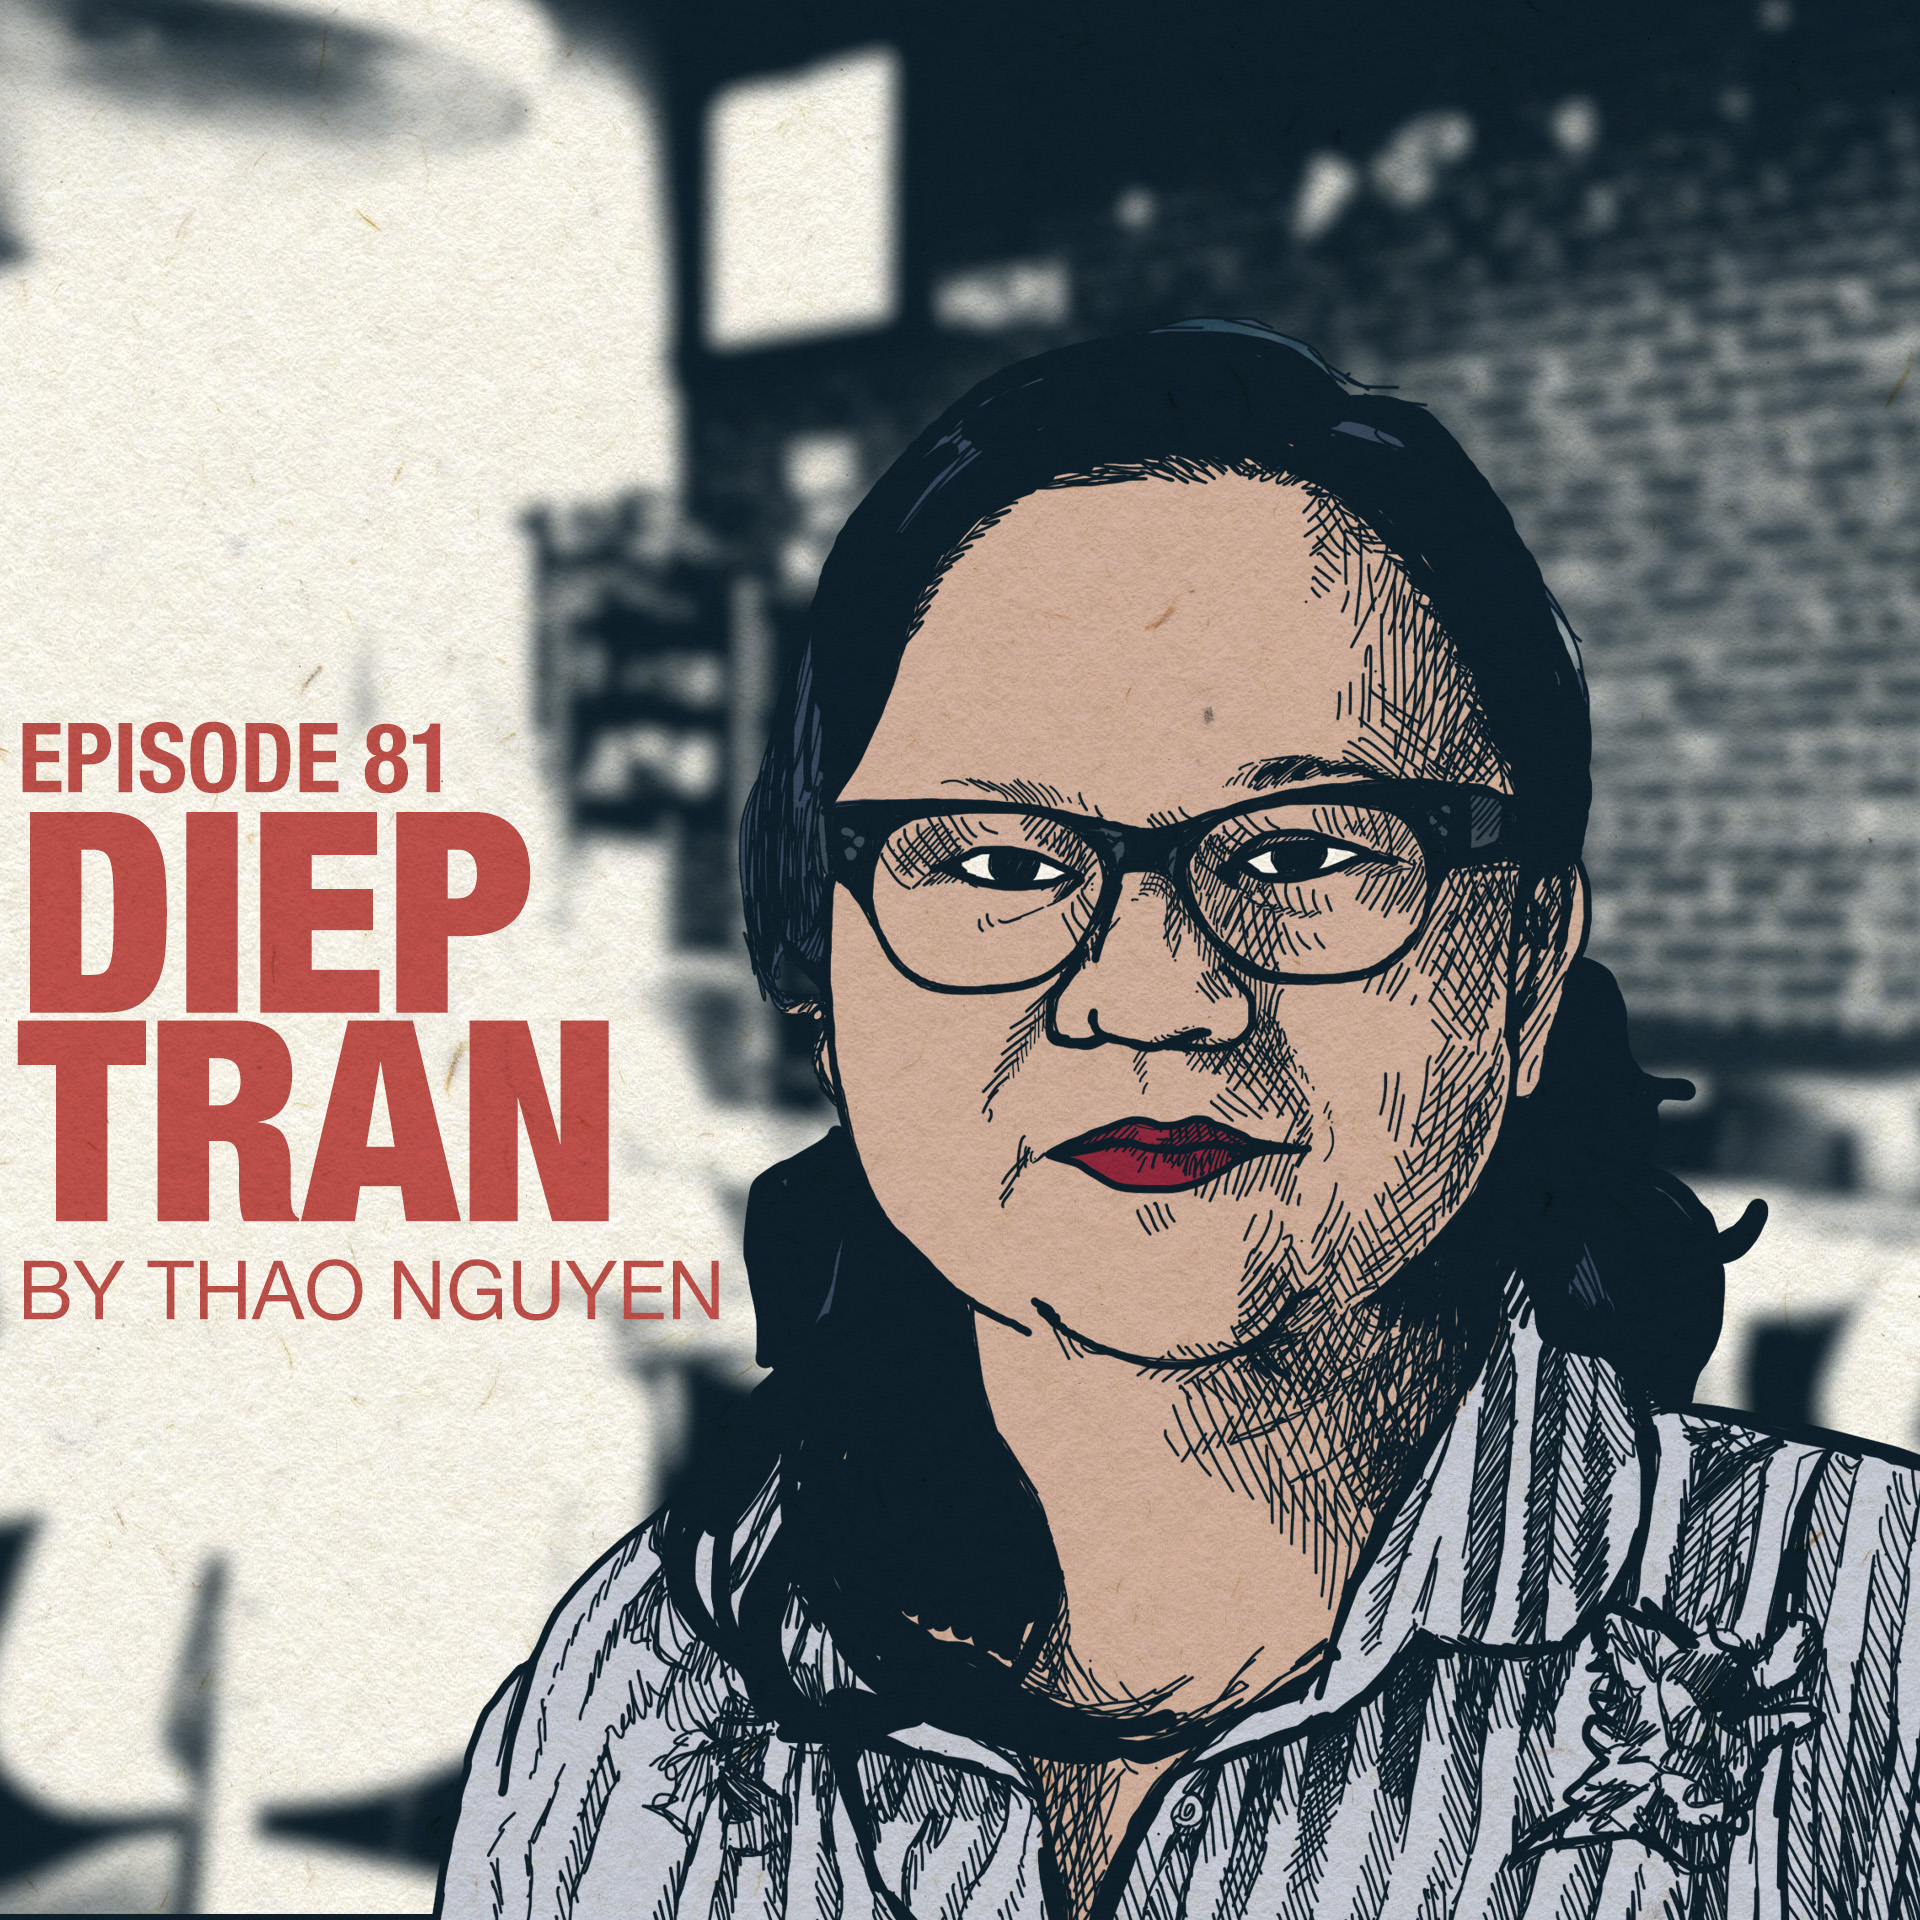 Ep 81: Thao Nguyen on Diep Tran